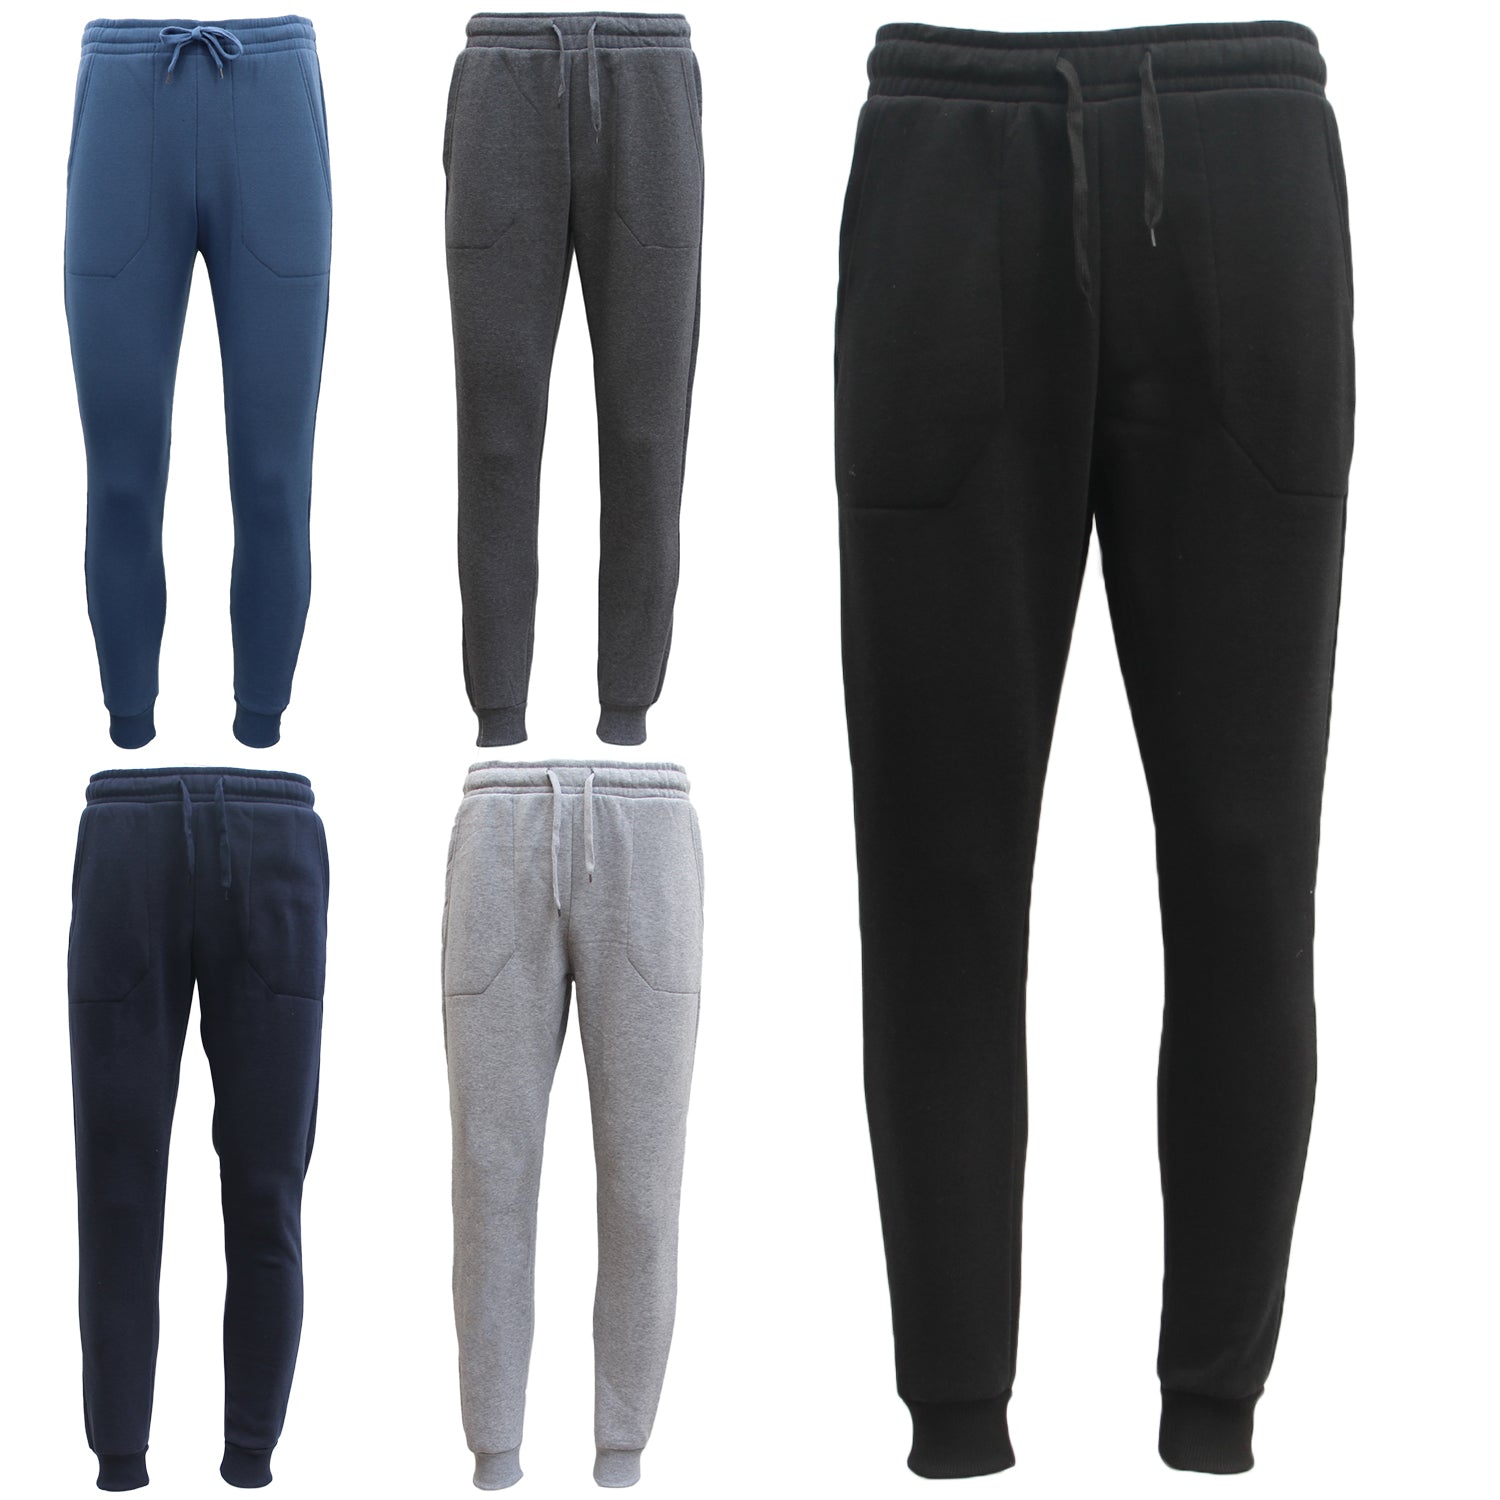 Mens Unisex Fleece Lined Sweat Track Pants Suit Casual Trackies Slim Cuff XS-6XL, Dark Grey, S